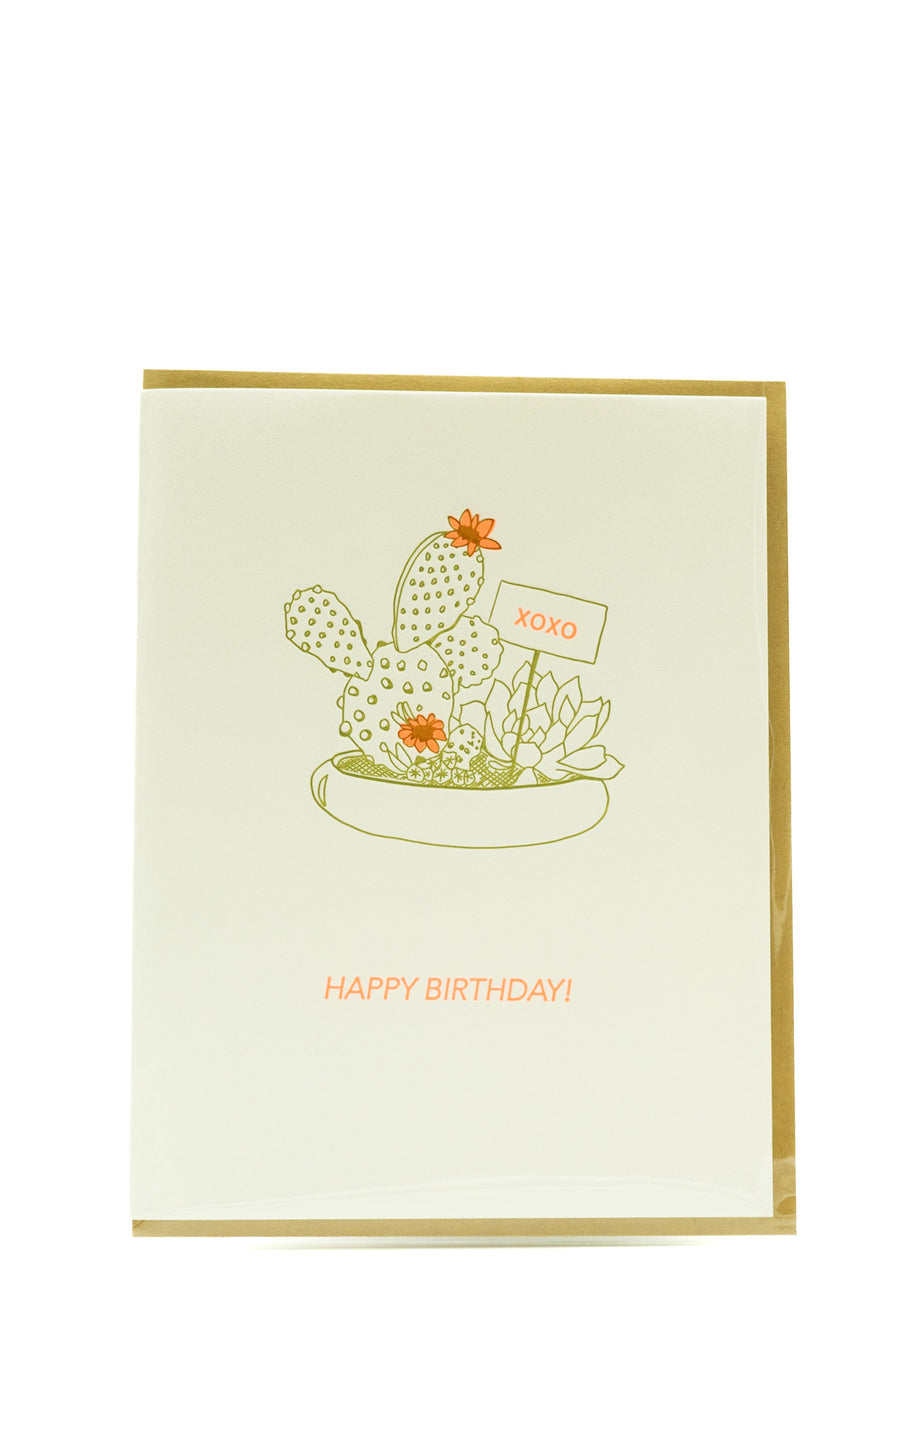 Happy Birthday XOXO Cactus Card by Lark Press